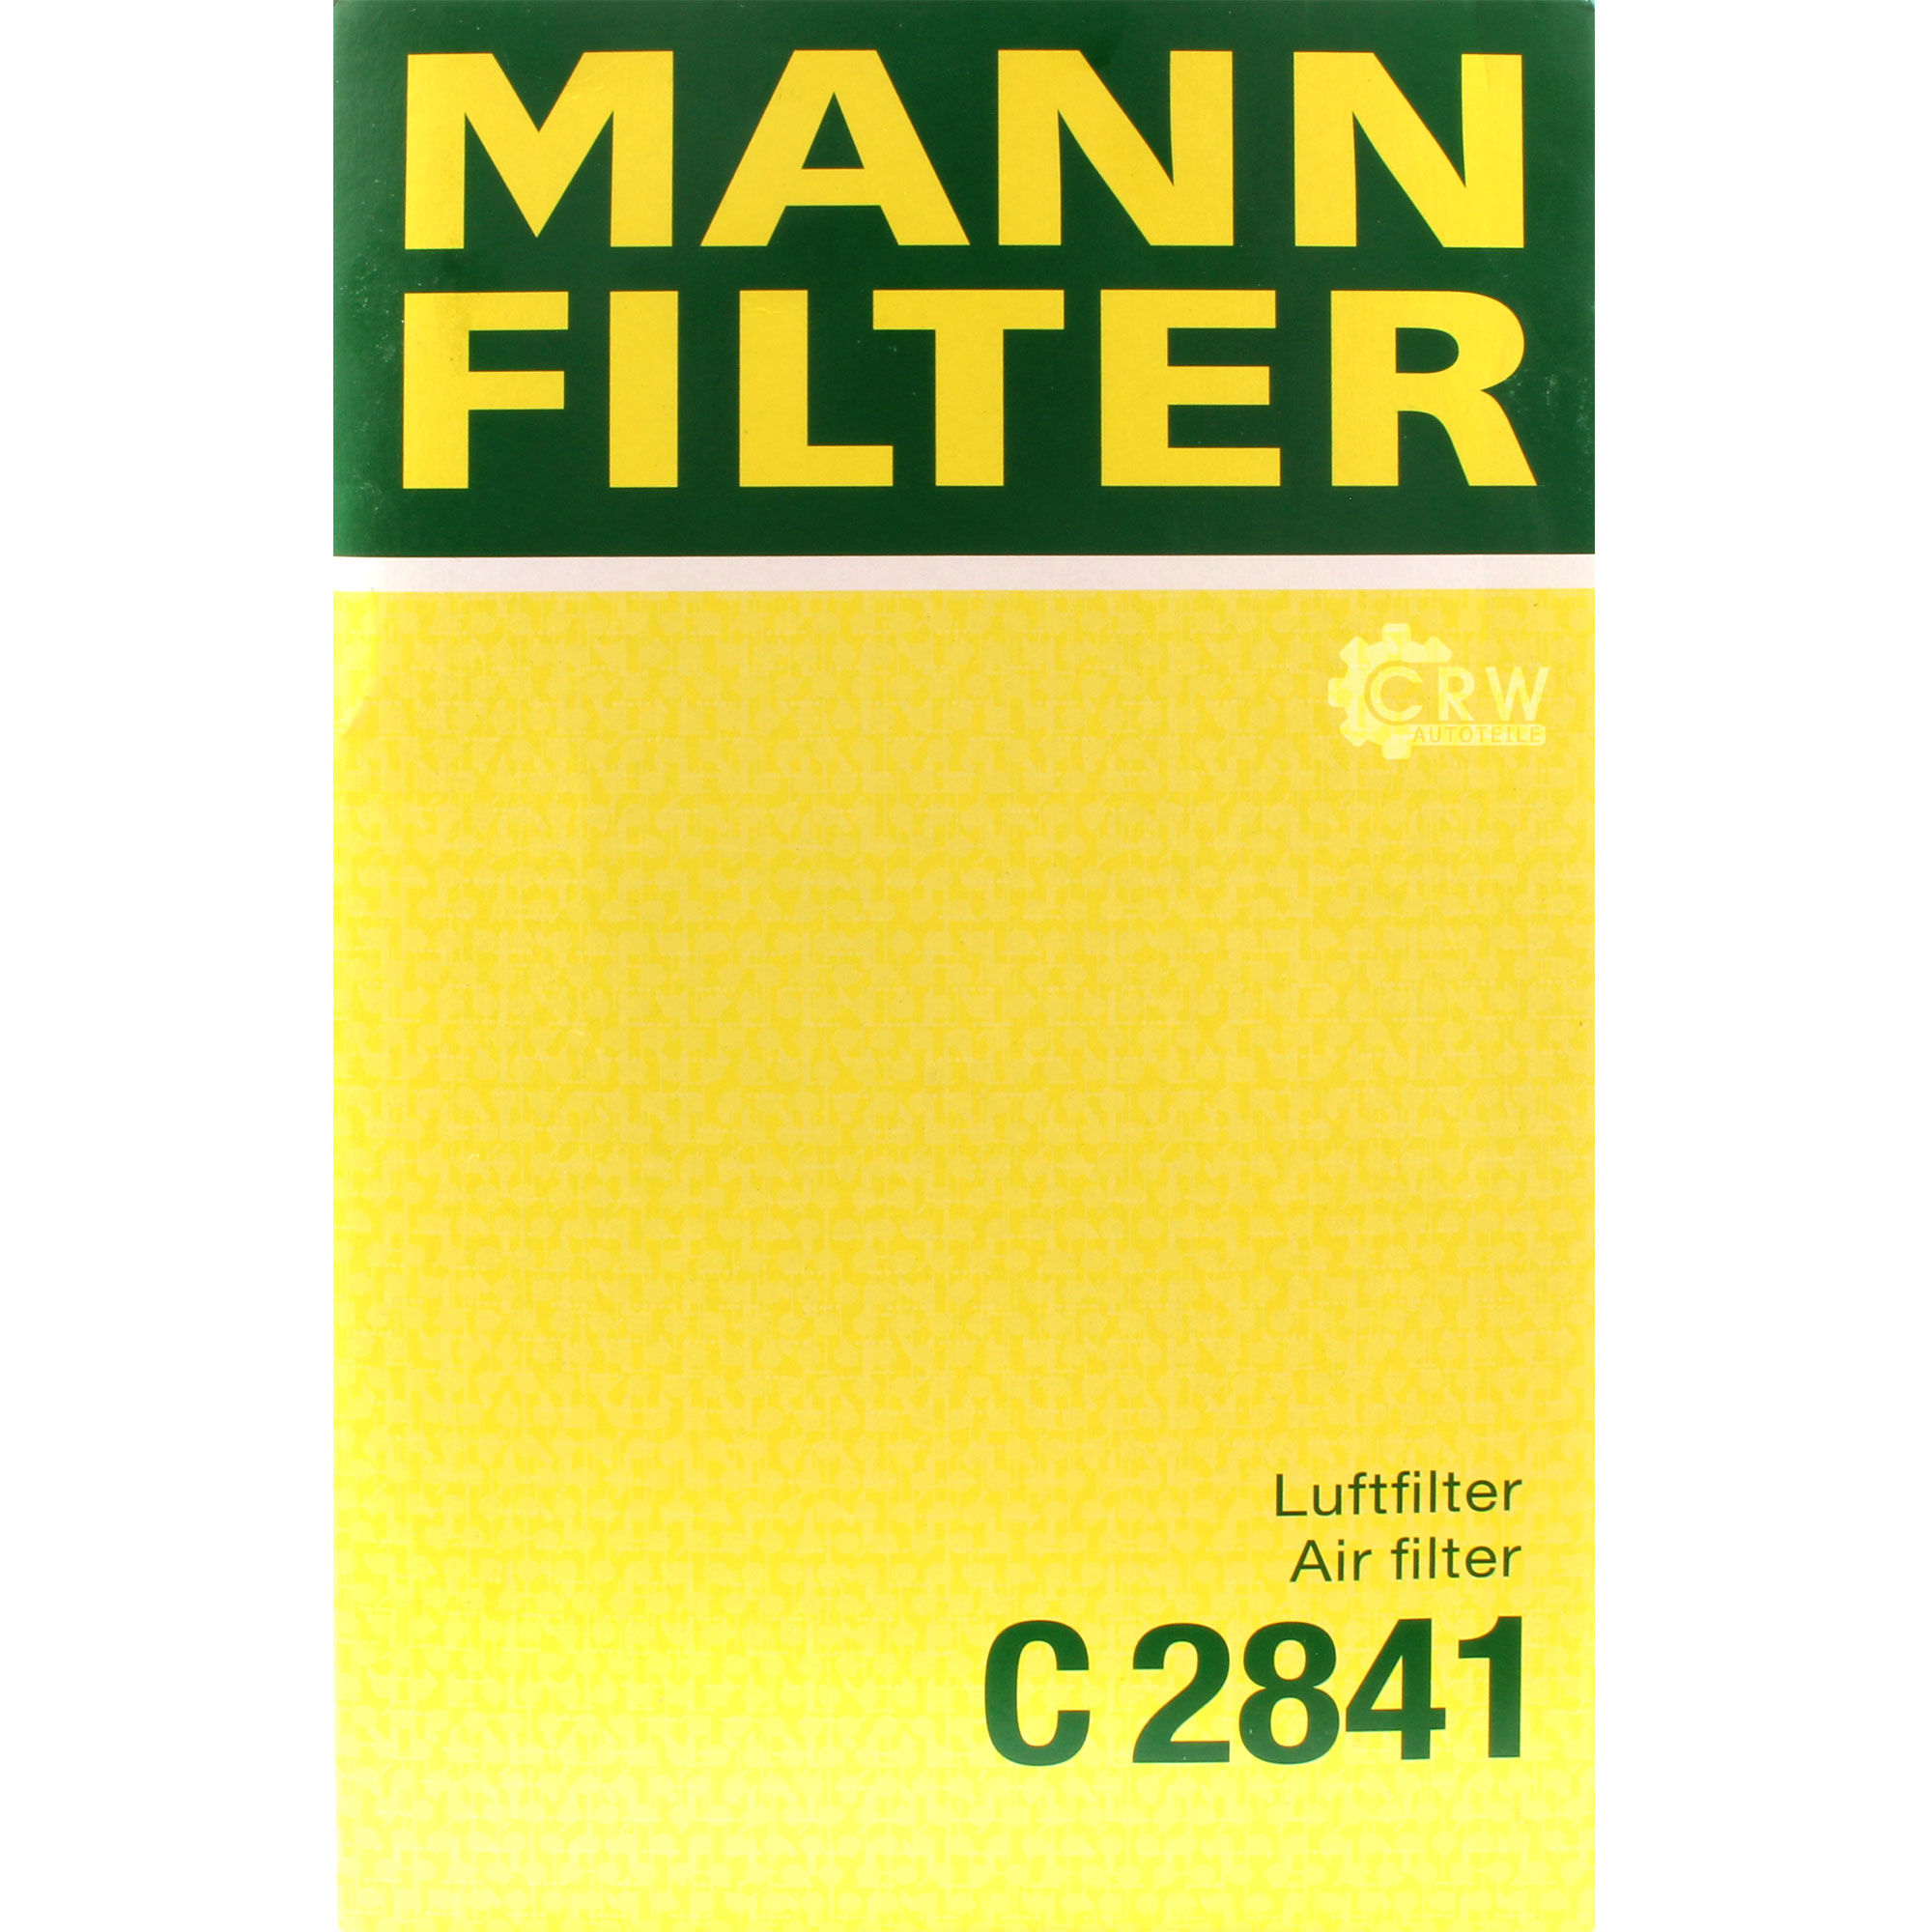 MANN-FILTER Luftfilter für Mazda 5 CR19 2.0 1.8 CW 3 BK BL 2.3 MPS Turbo